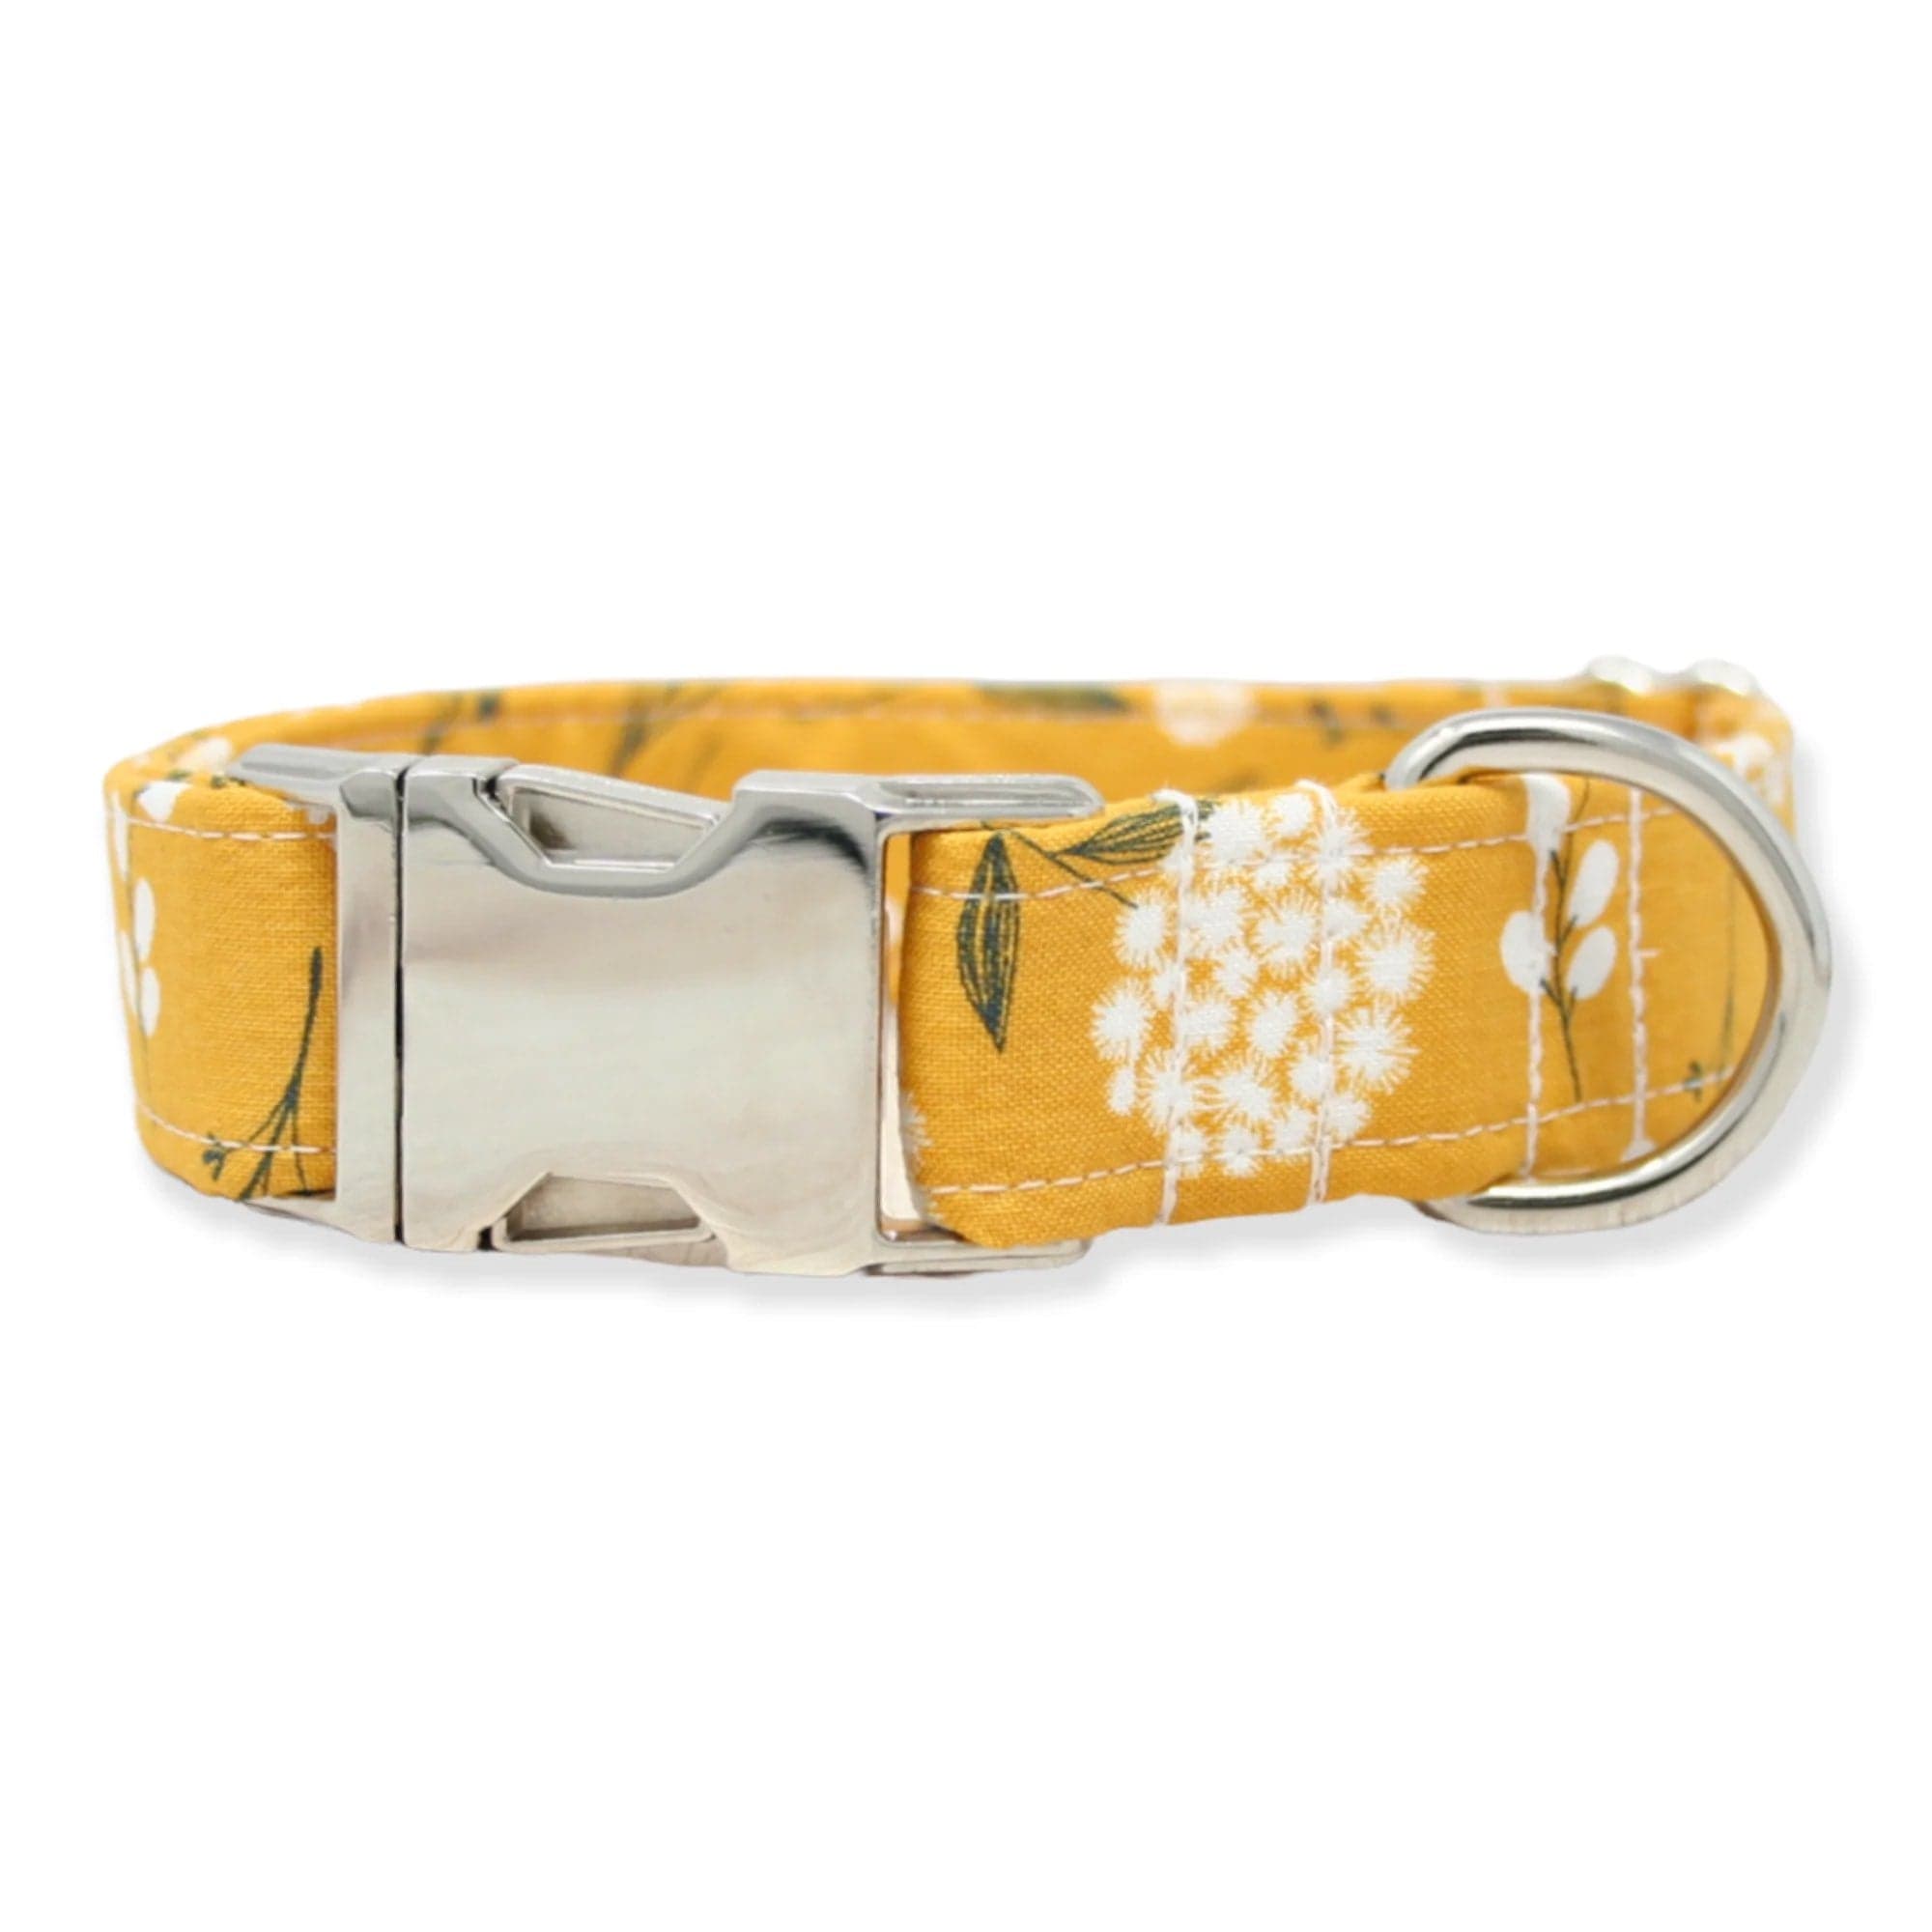 The Oxford Dog Mustard Floral Dog Collar